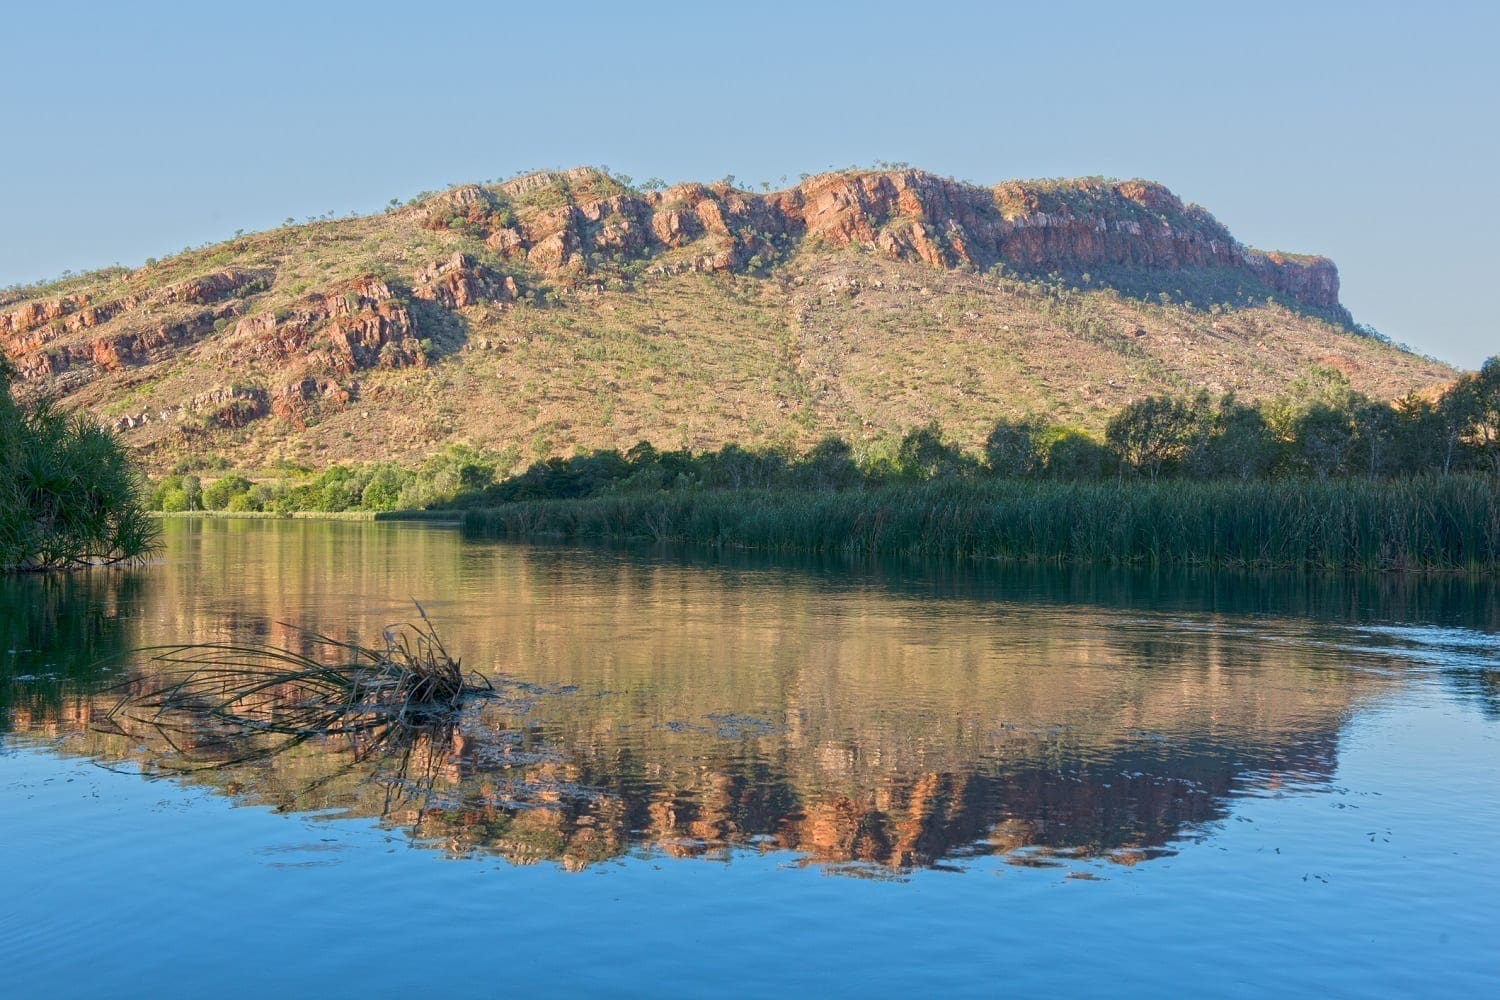 View of a sandstone hill from the Ord river near Kununurra, Western Australia.ID 108417732 © Johncarnemolla | Dreamstime.com